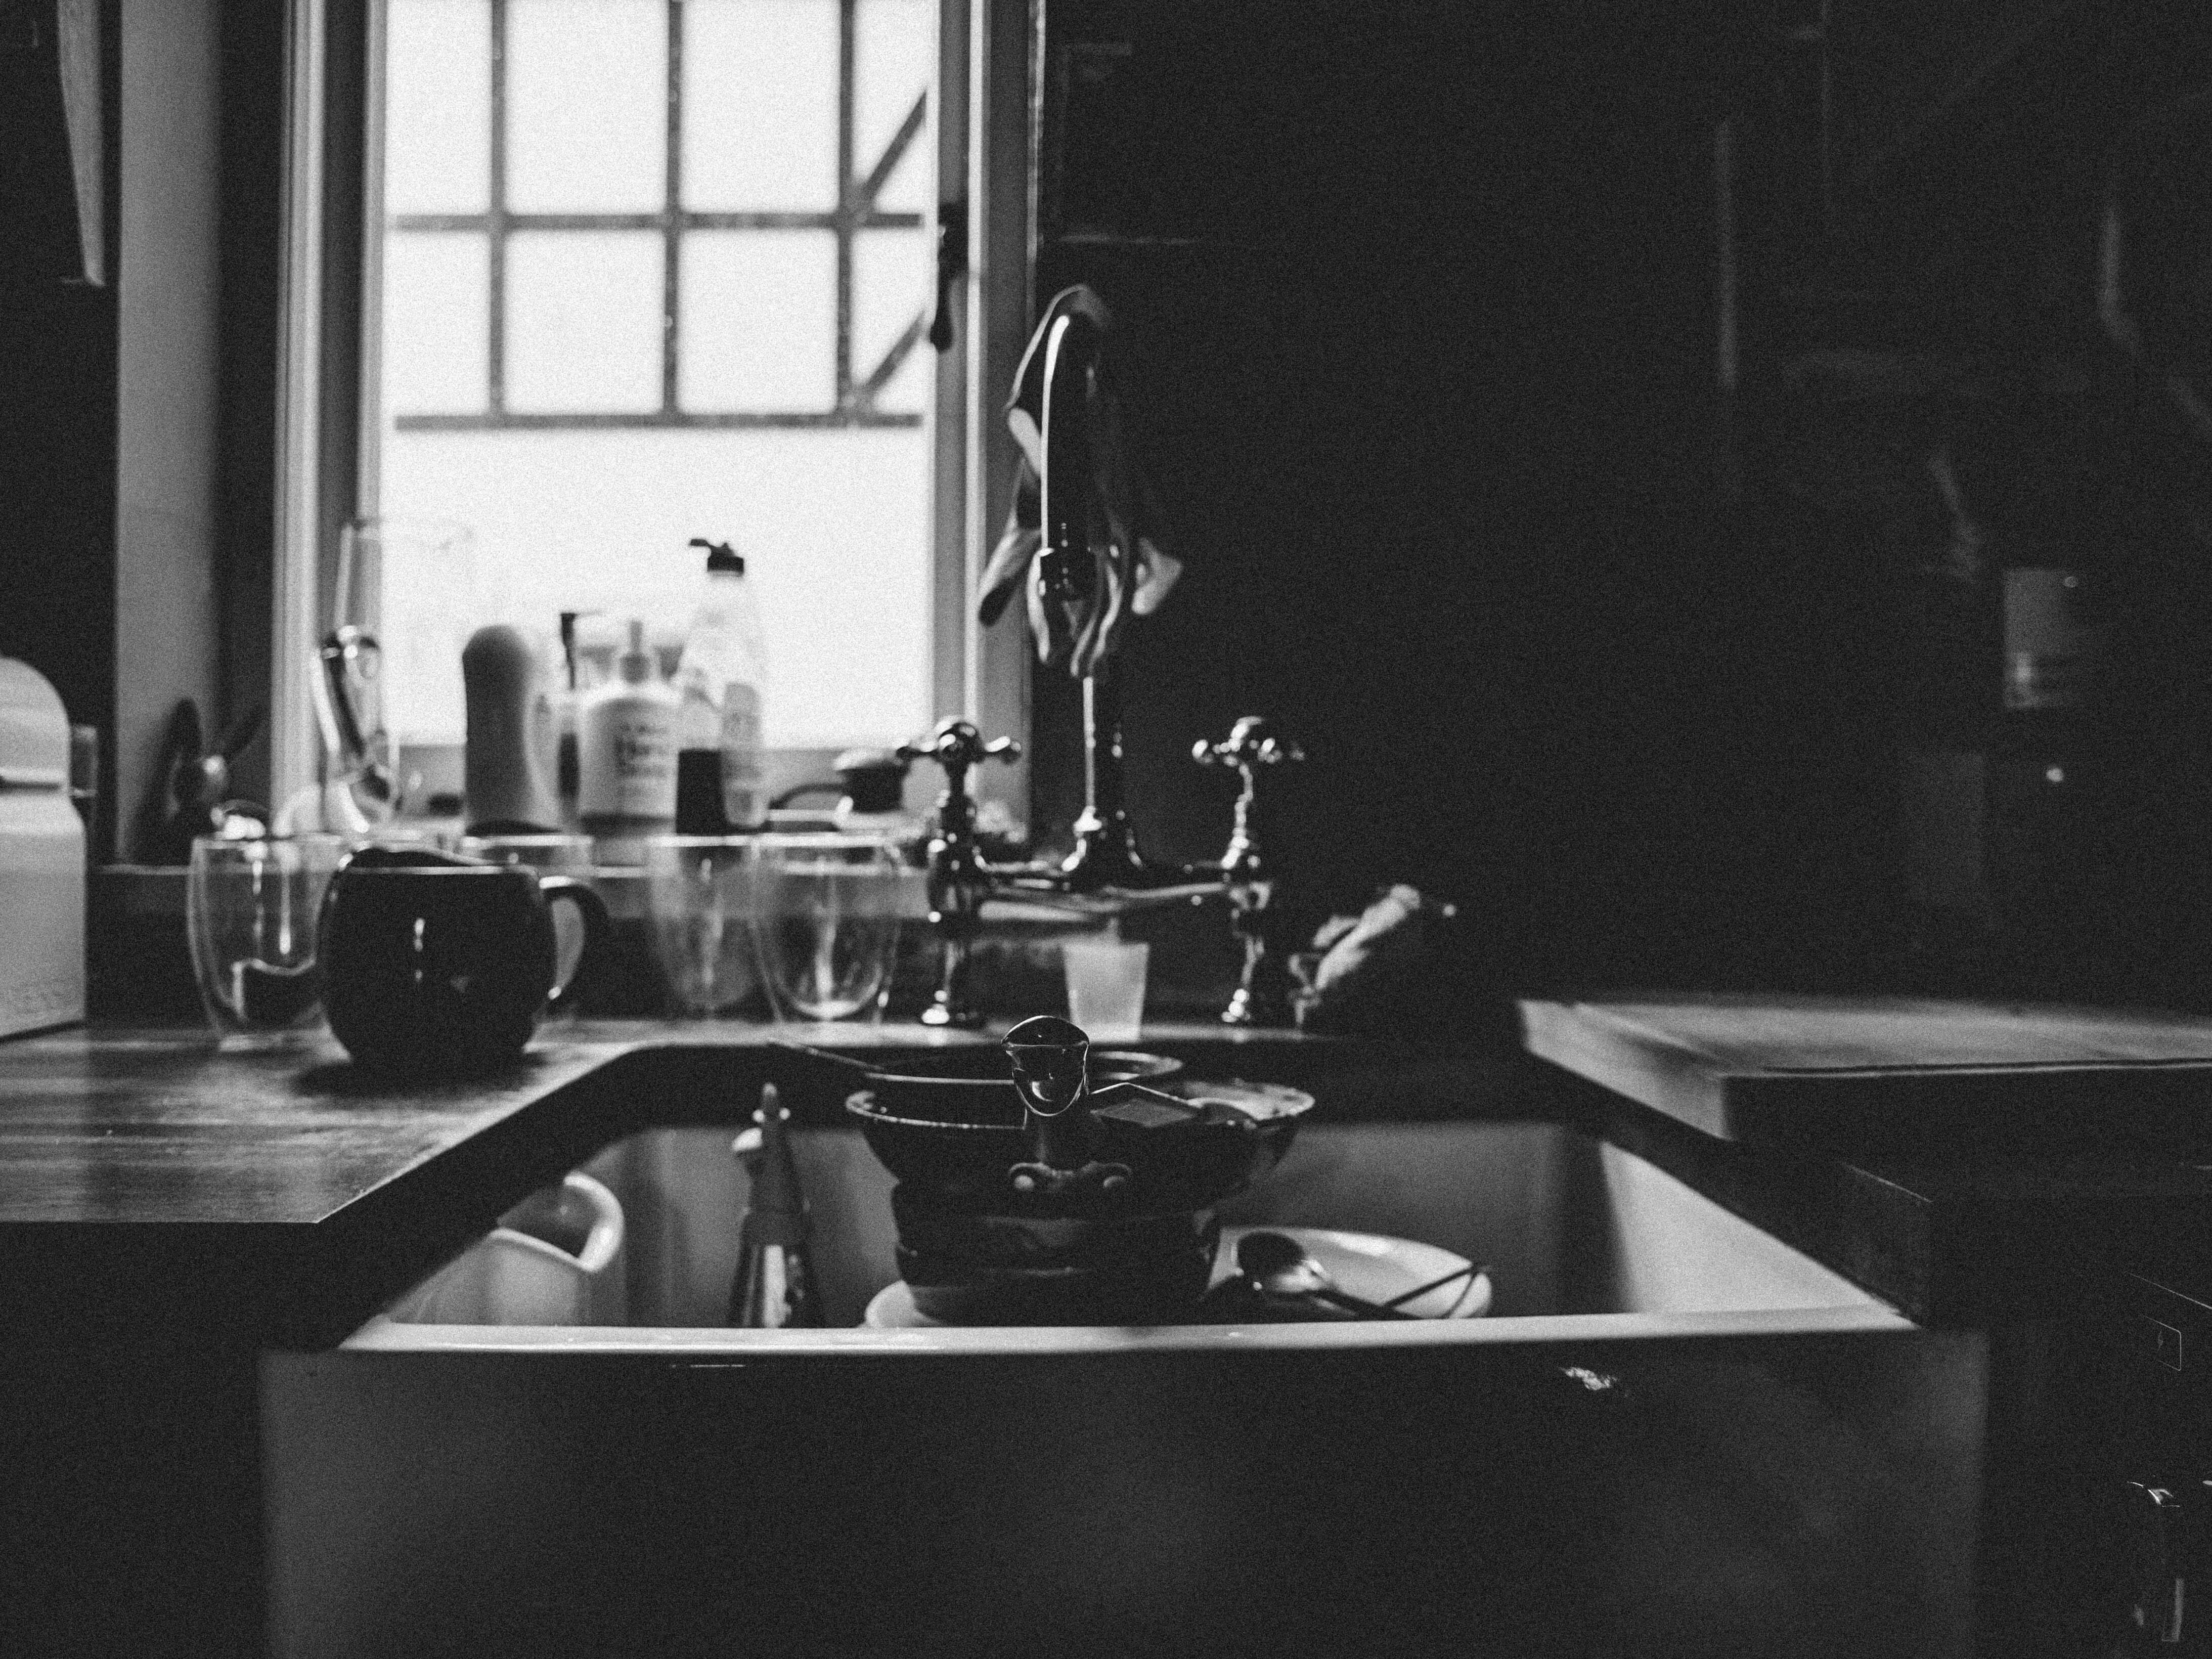 oude keuken in zwart en wit, roestvrij stalen keukengereien